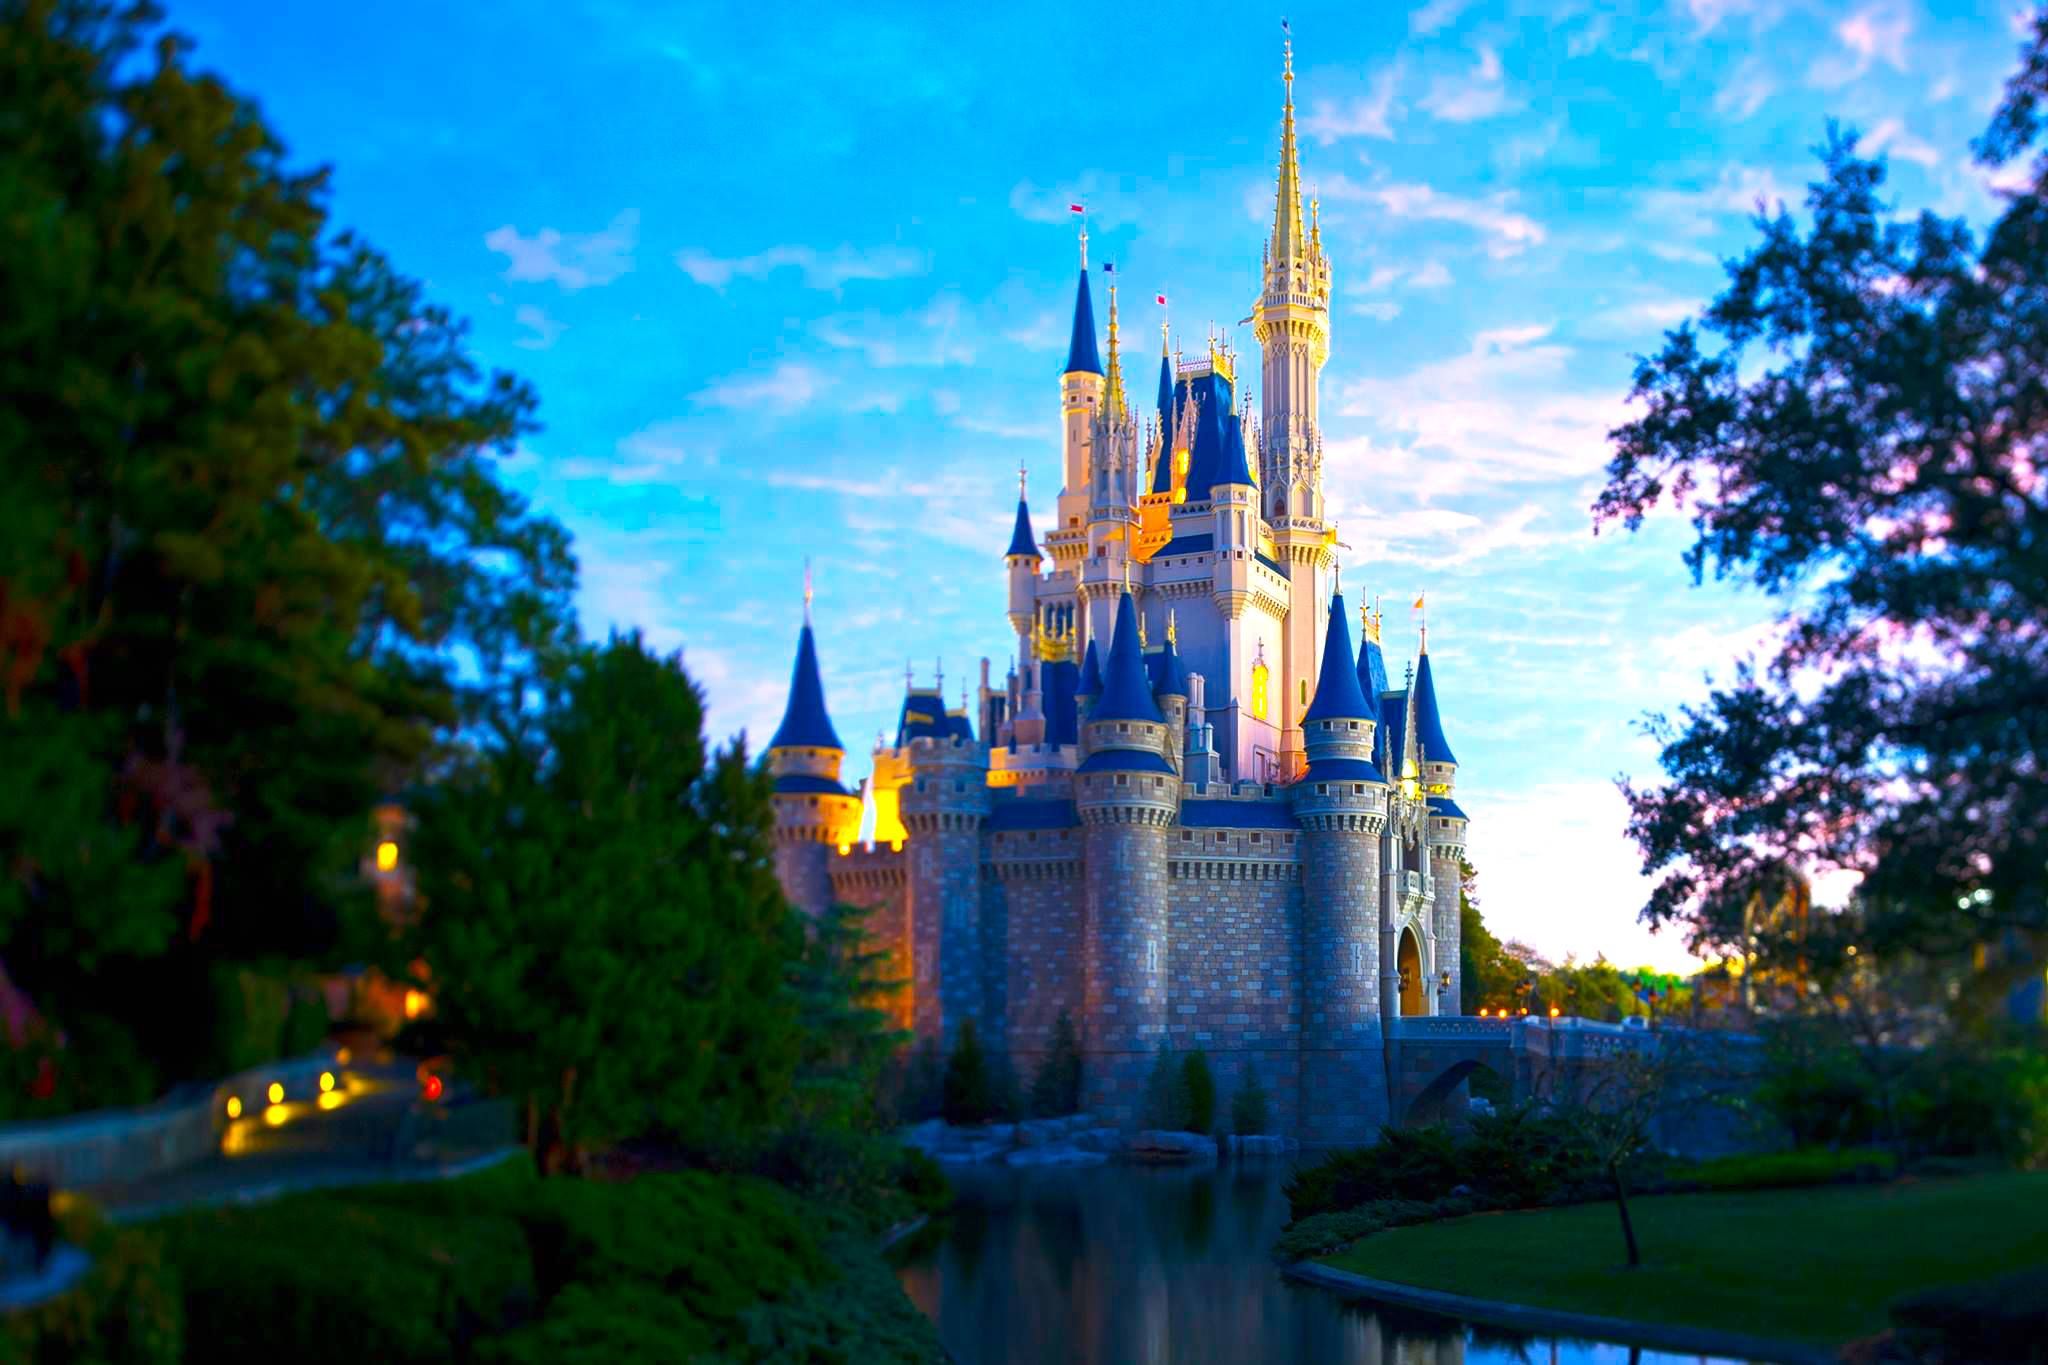 $12,000 Disney tour brings you inside Cinderella’s Castle